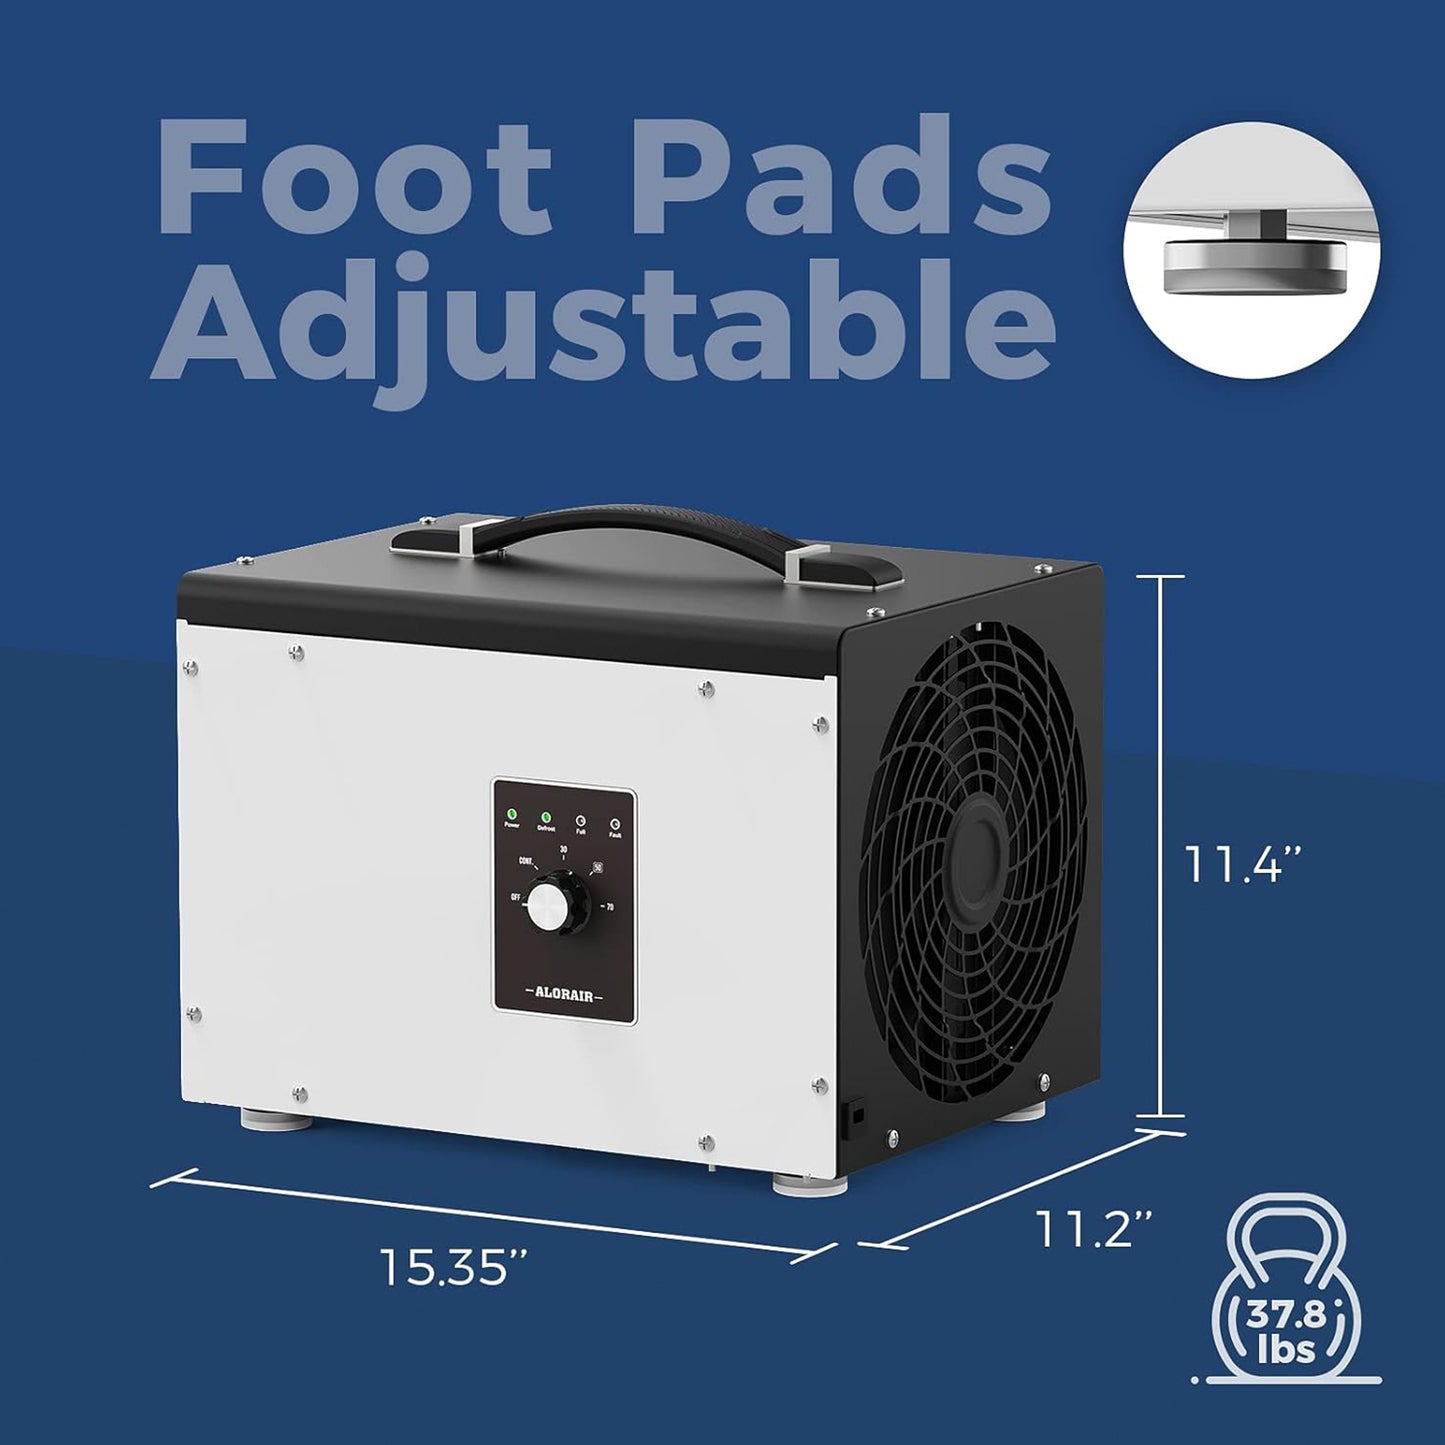 Adjustable foot pads